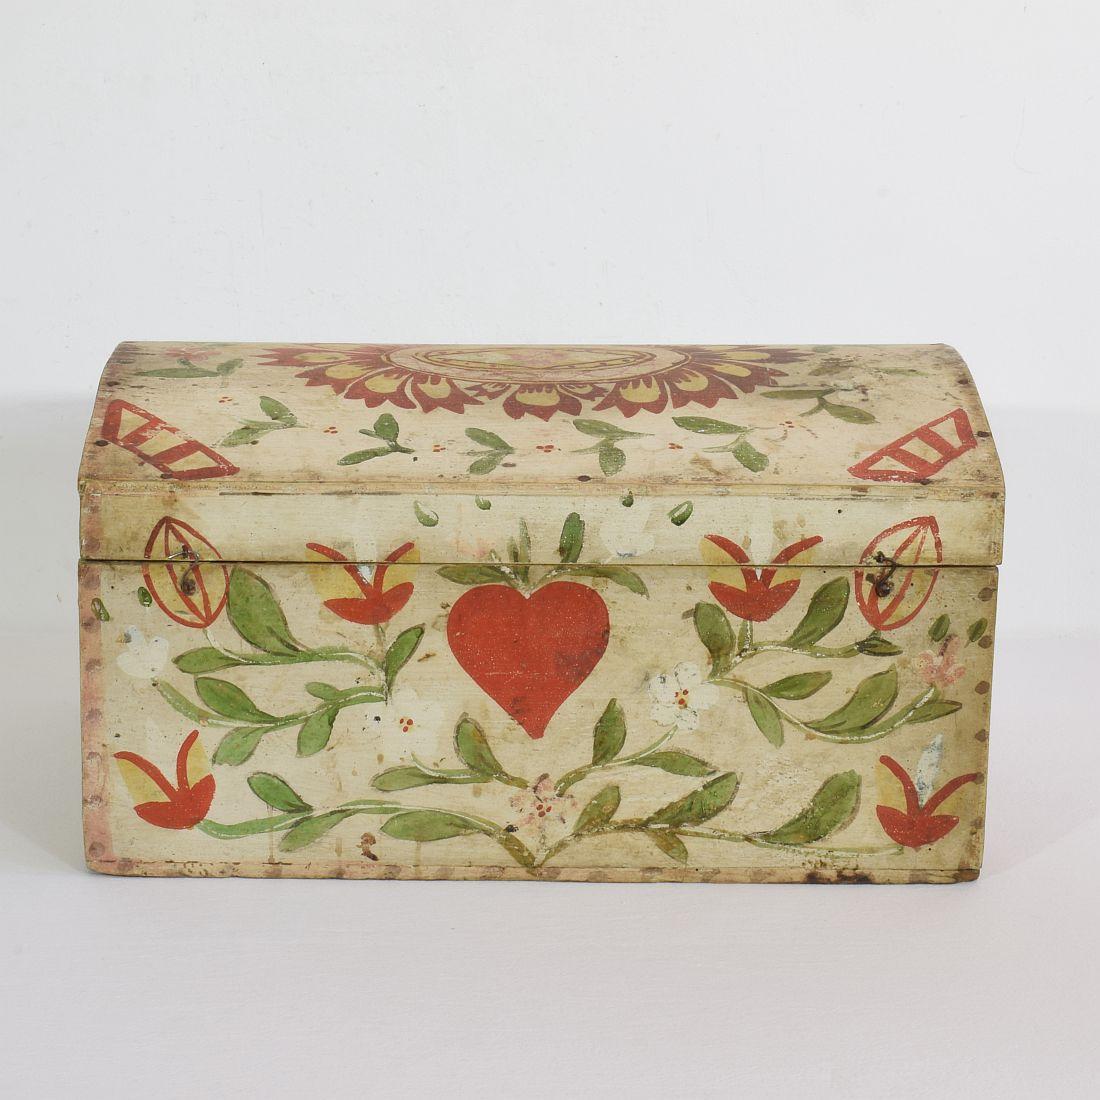 Beautiful Folk Art wedding box.
Normandie, France, circa 1800-1850. Weathered.
 
 
 
 